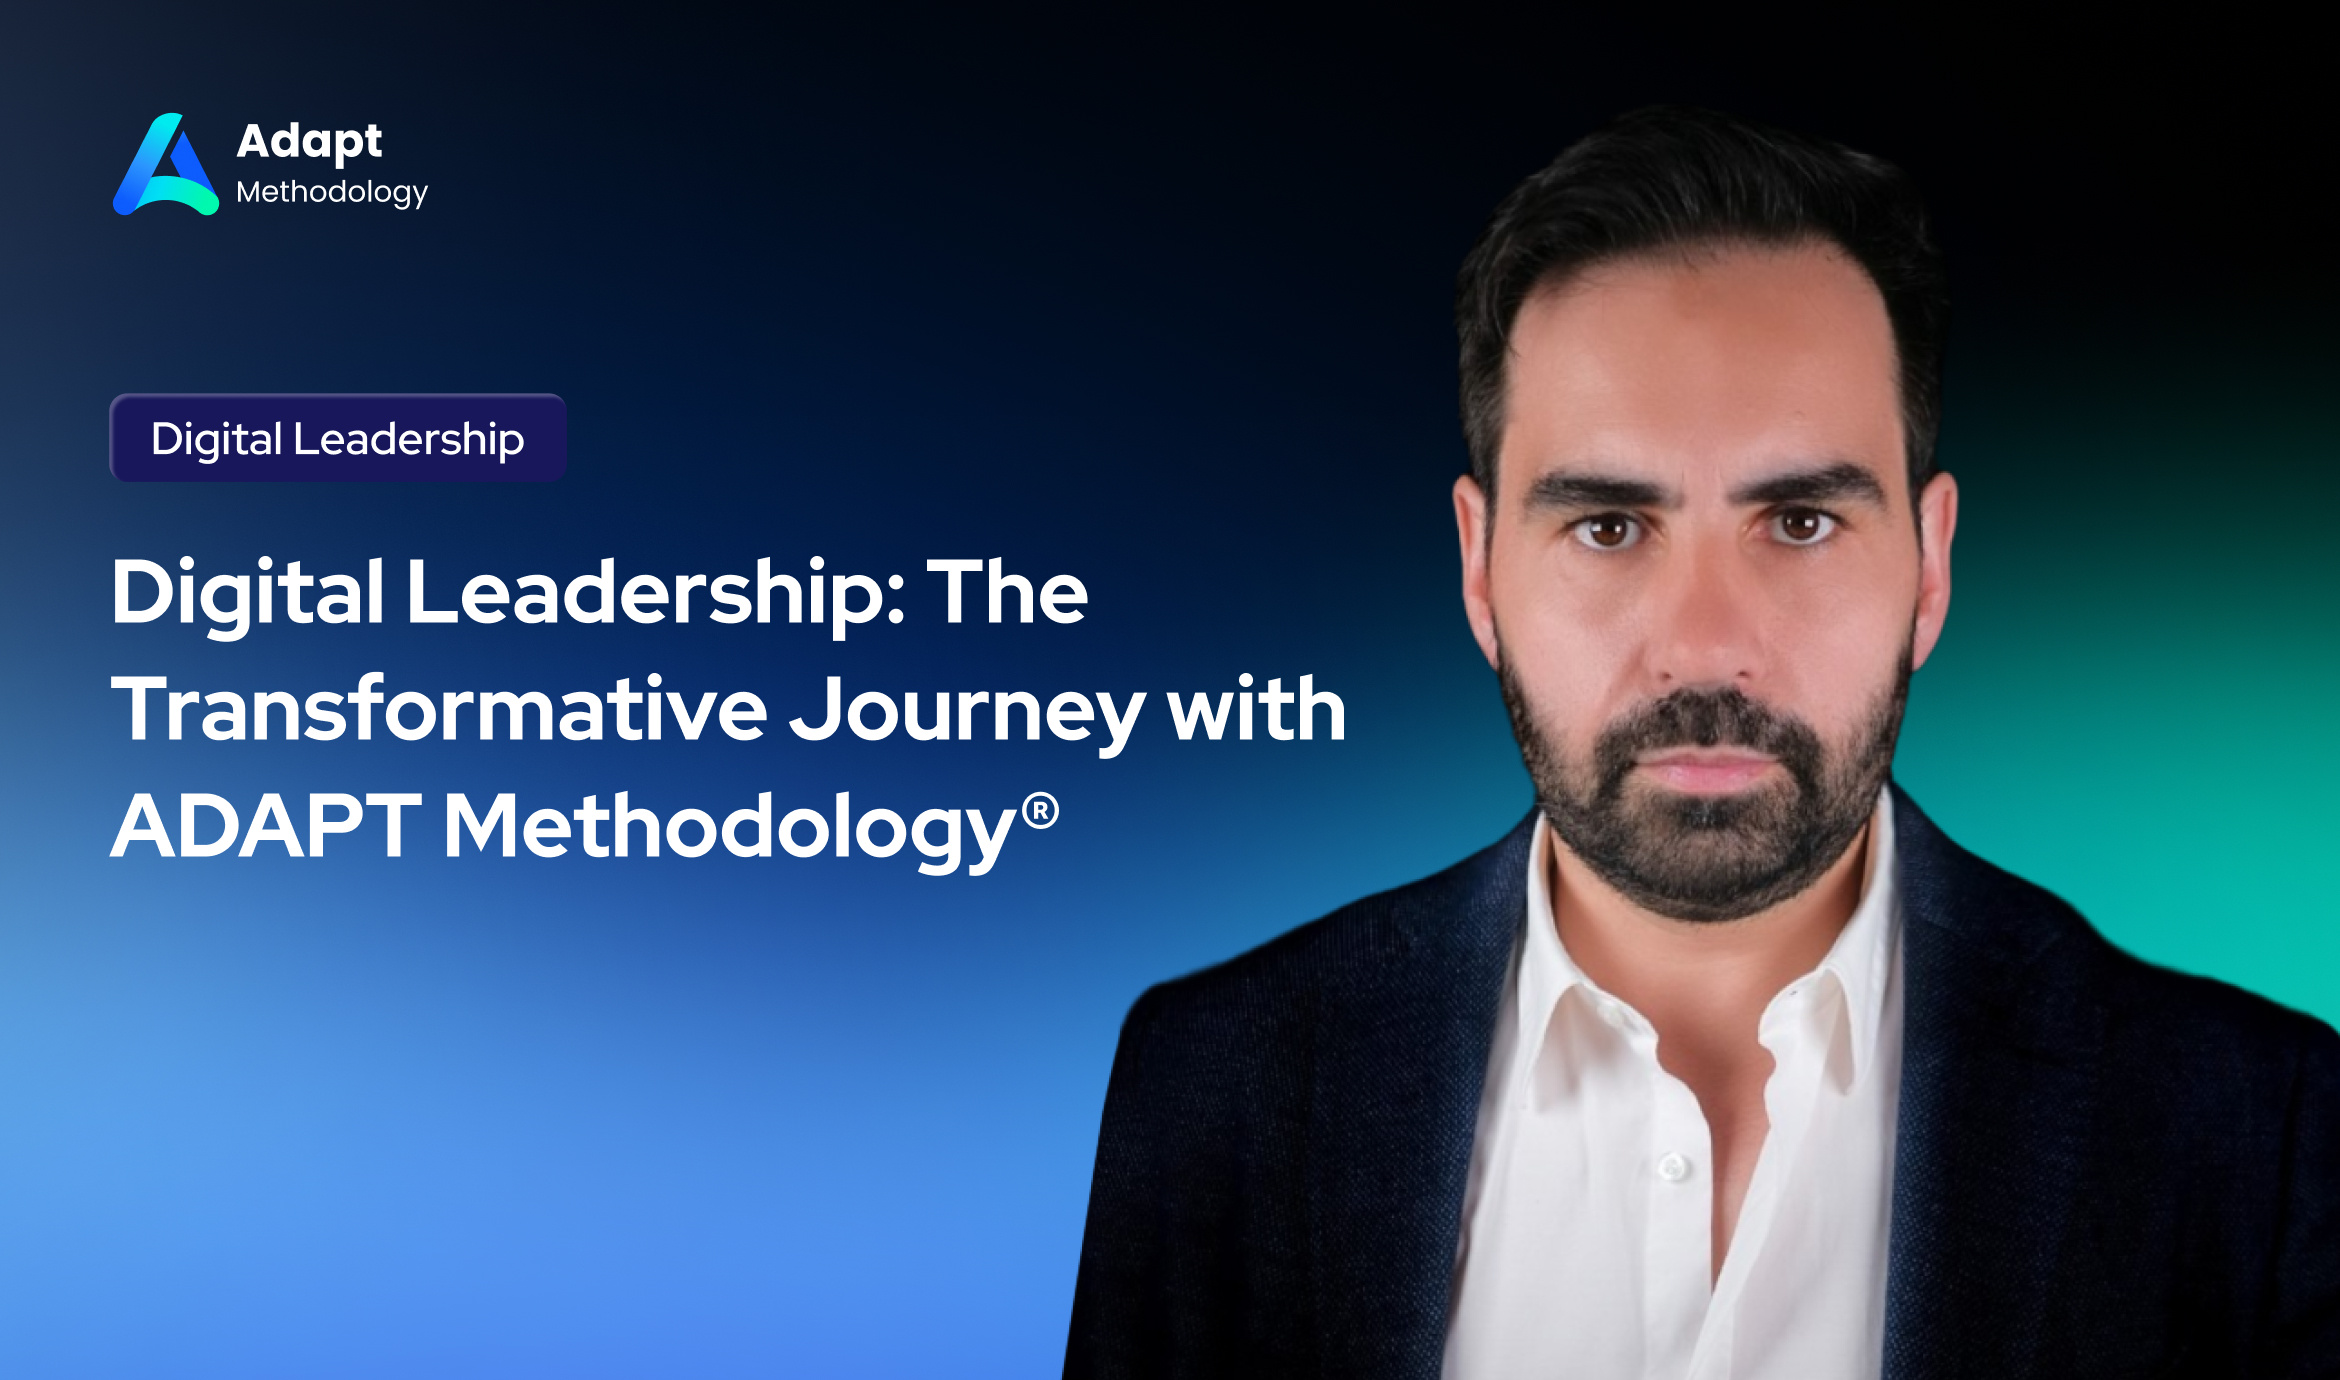 Digital Leadership The Transformative Journey with ADAPT Methodology